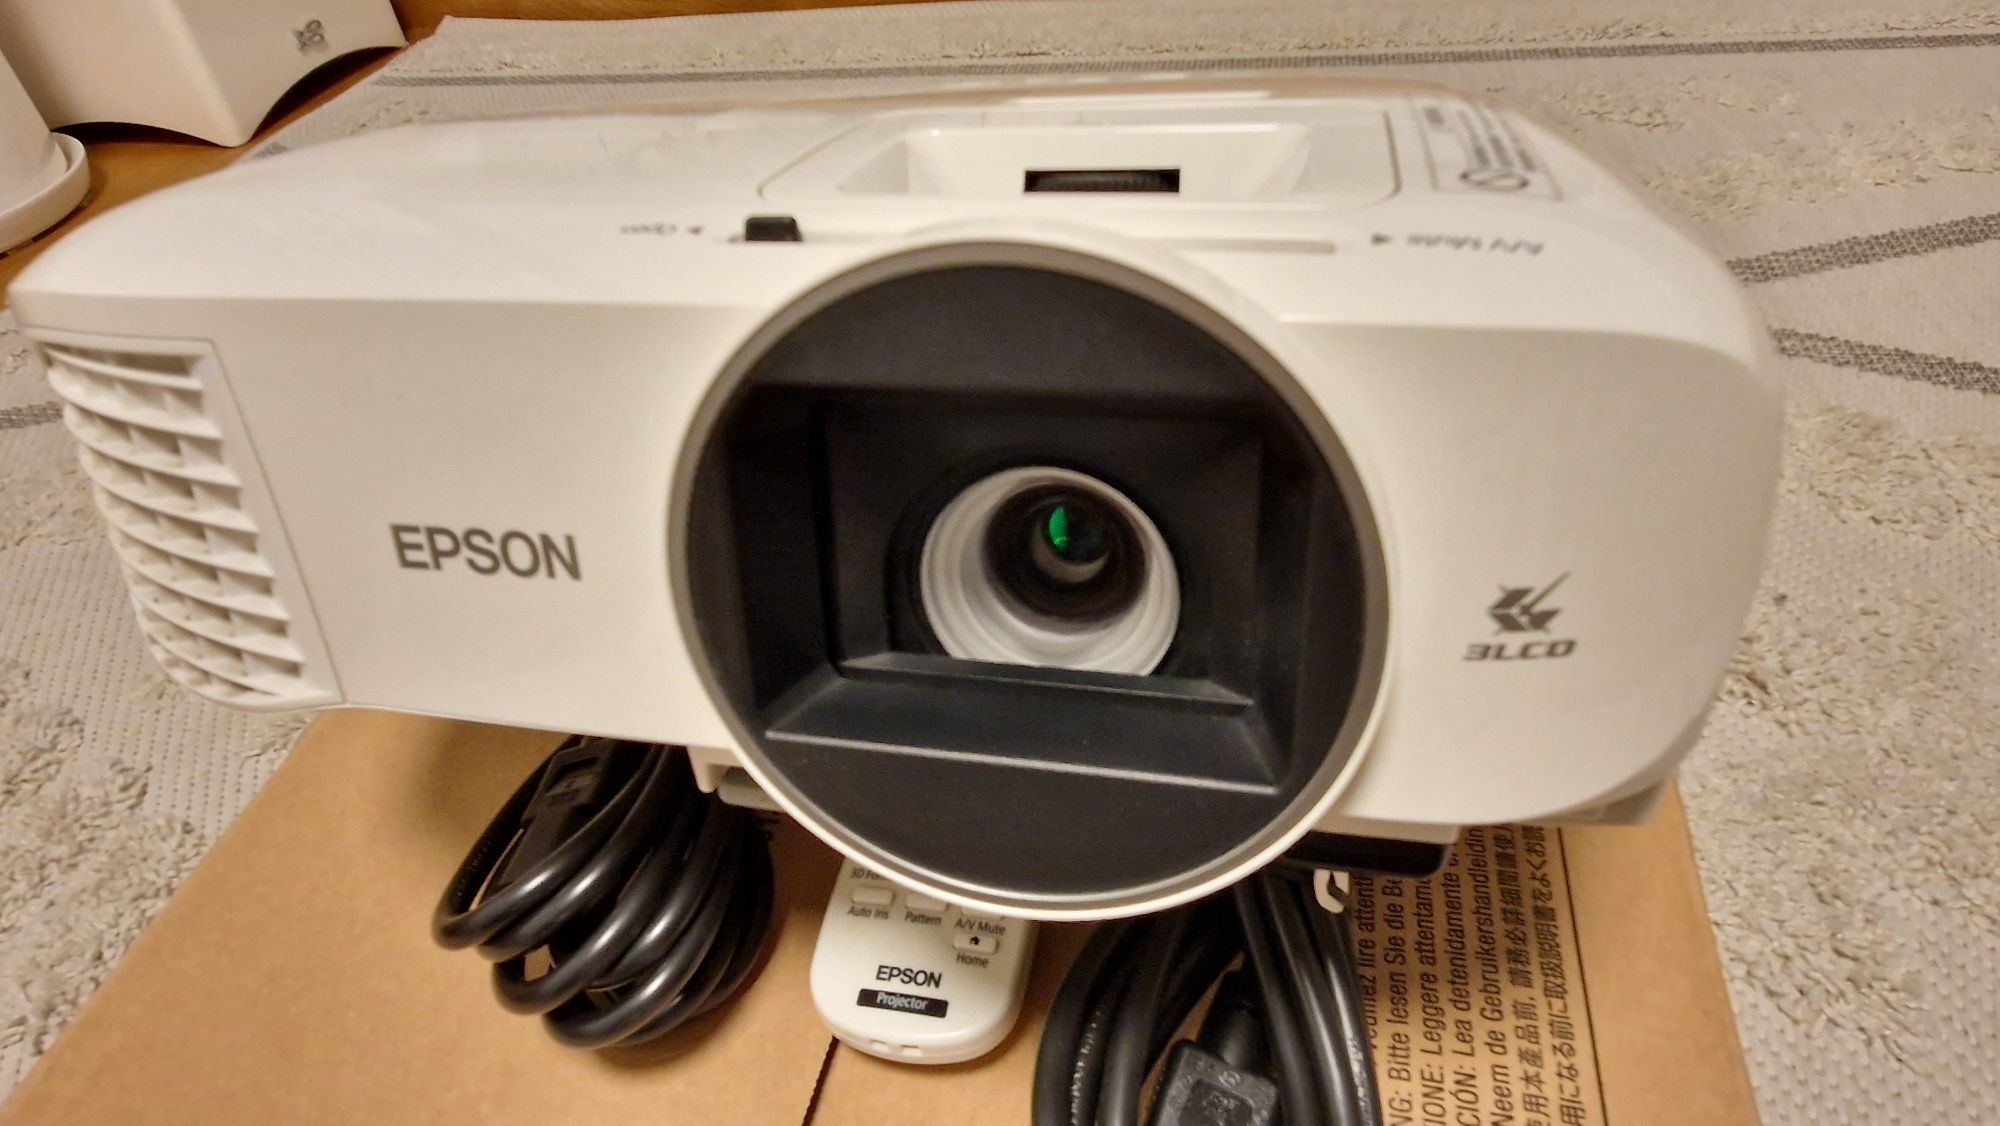 Projektor Epson Eh-TW5600 - Full HD 1080p- bardzo dobry stan polecam!